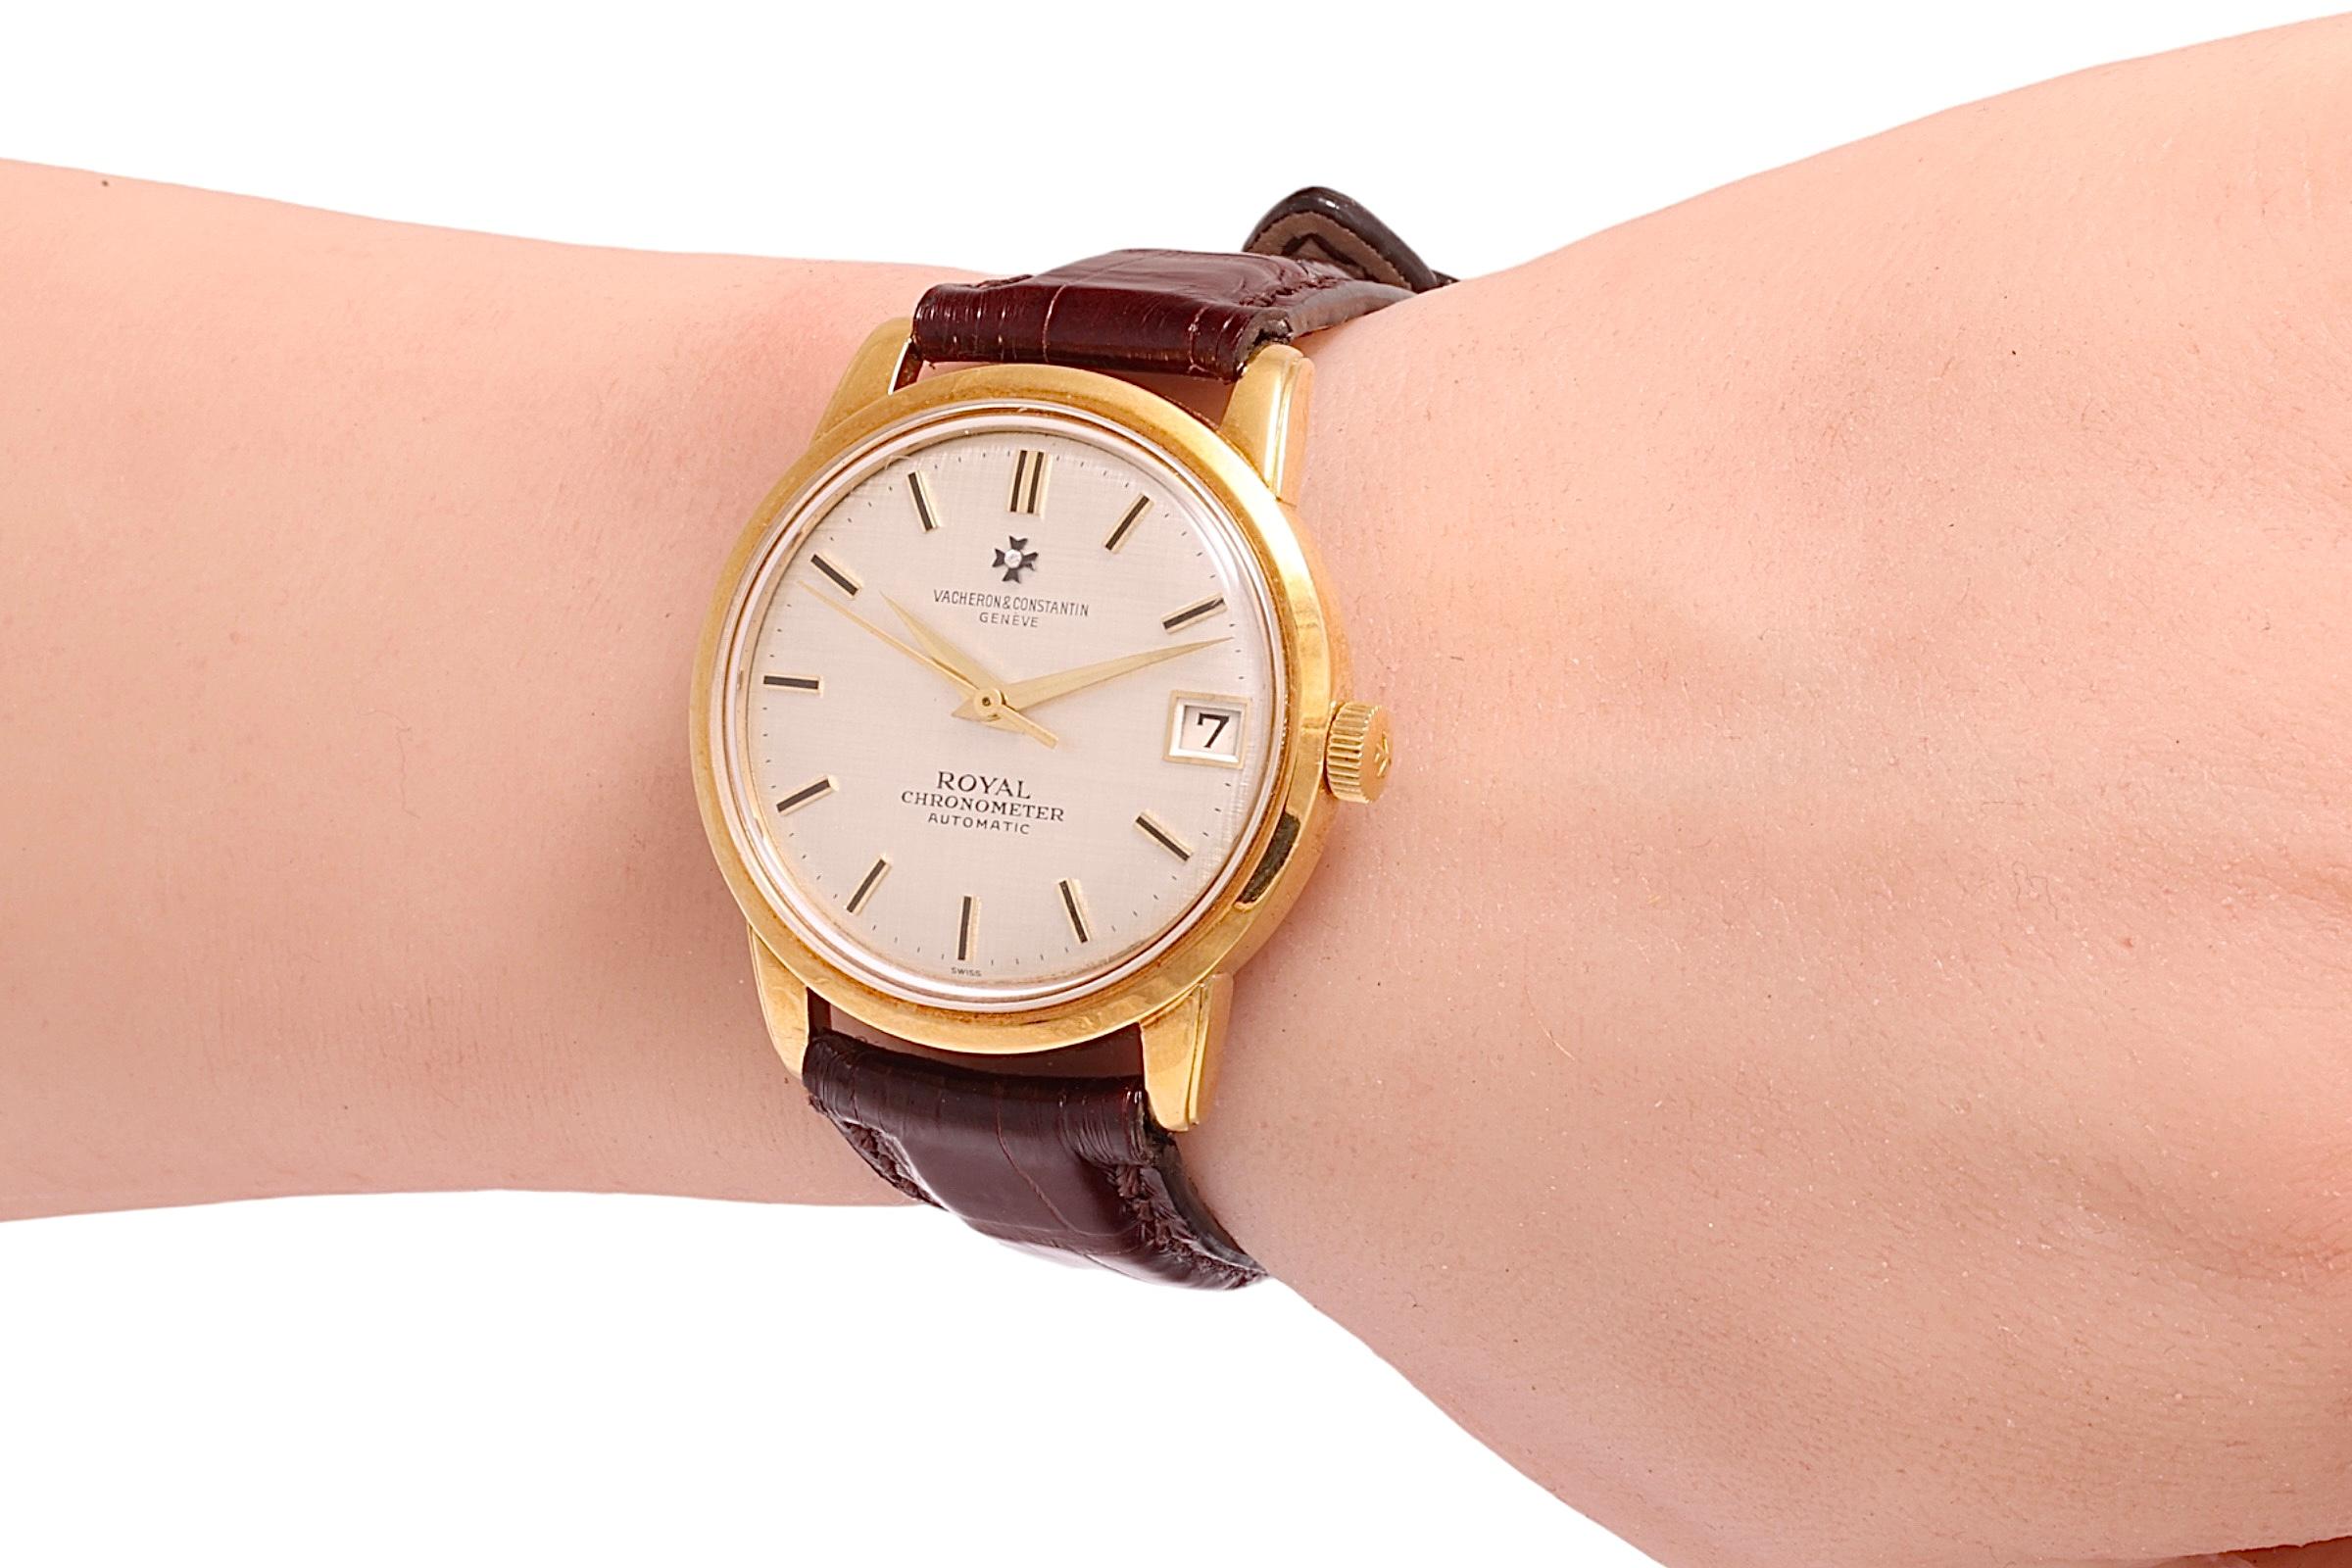 Vacheron Constantin Chronometre Royal Wrist Watch For Sale 1